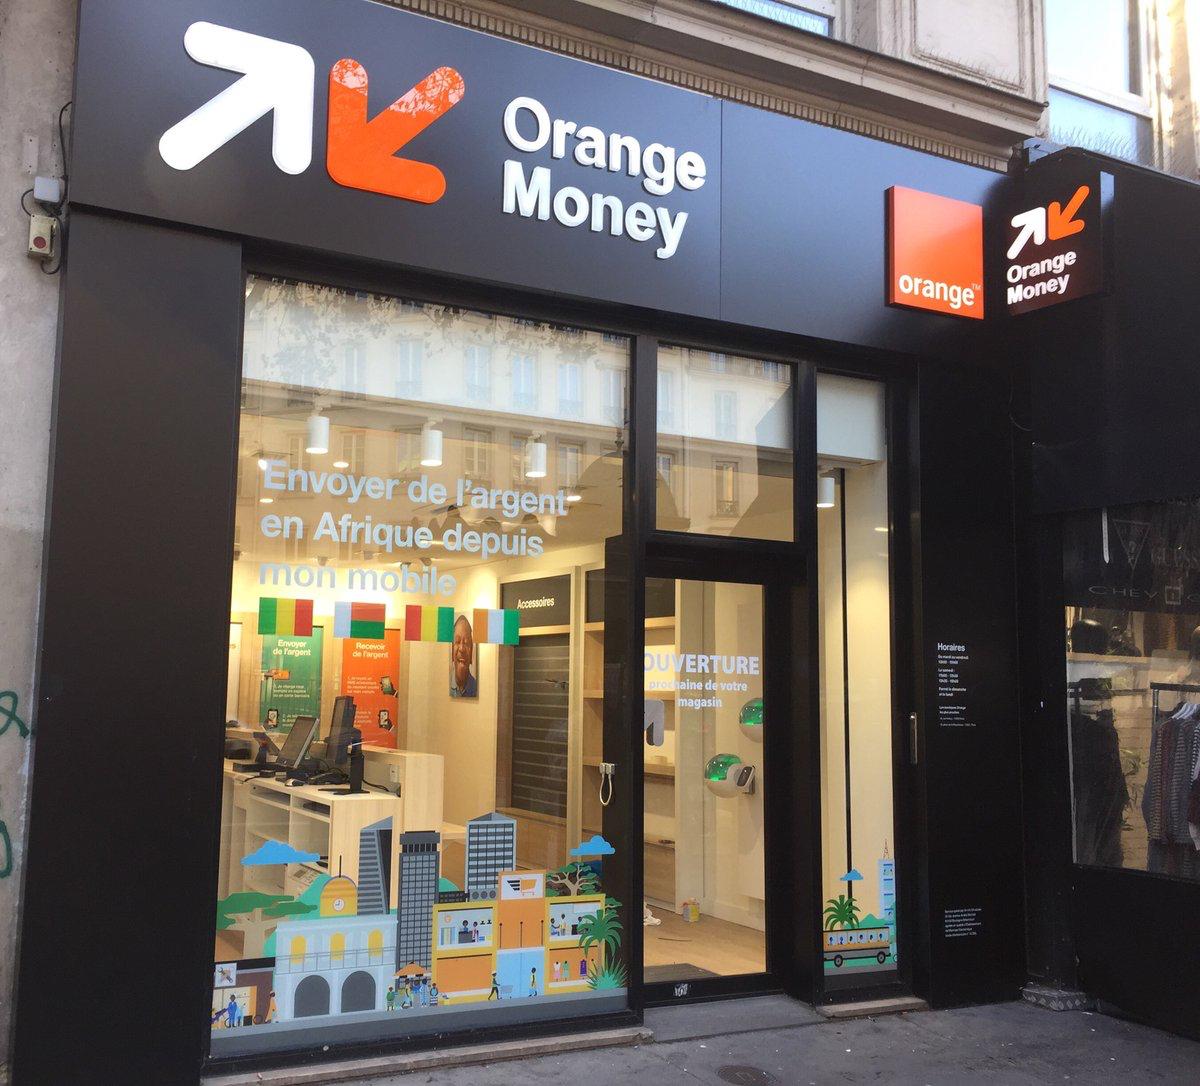 Transfert d’argent : Orange money baisse ses tarifs 